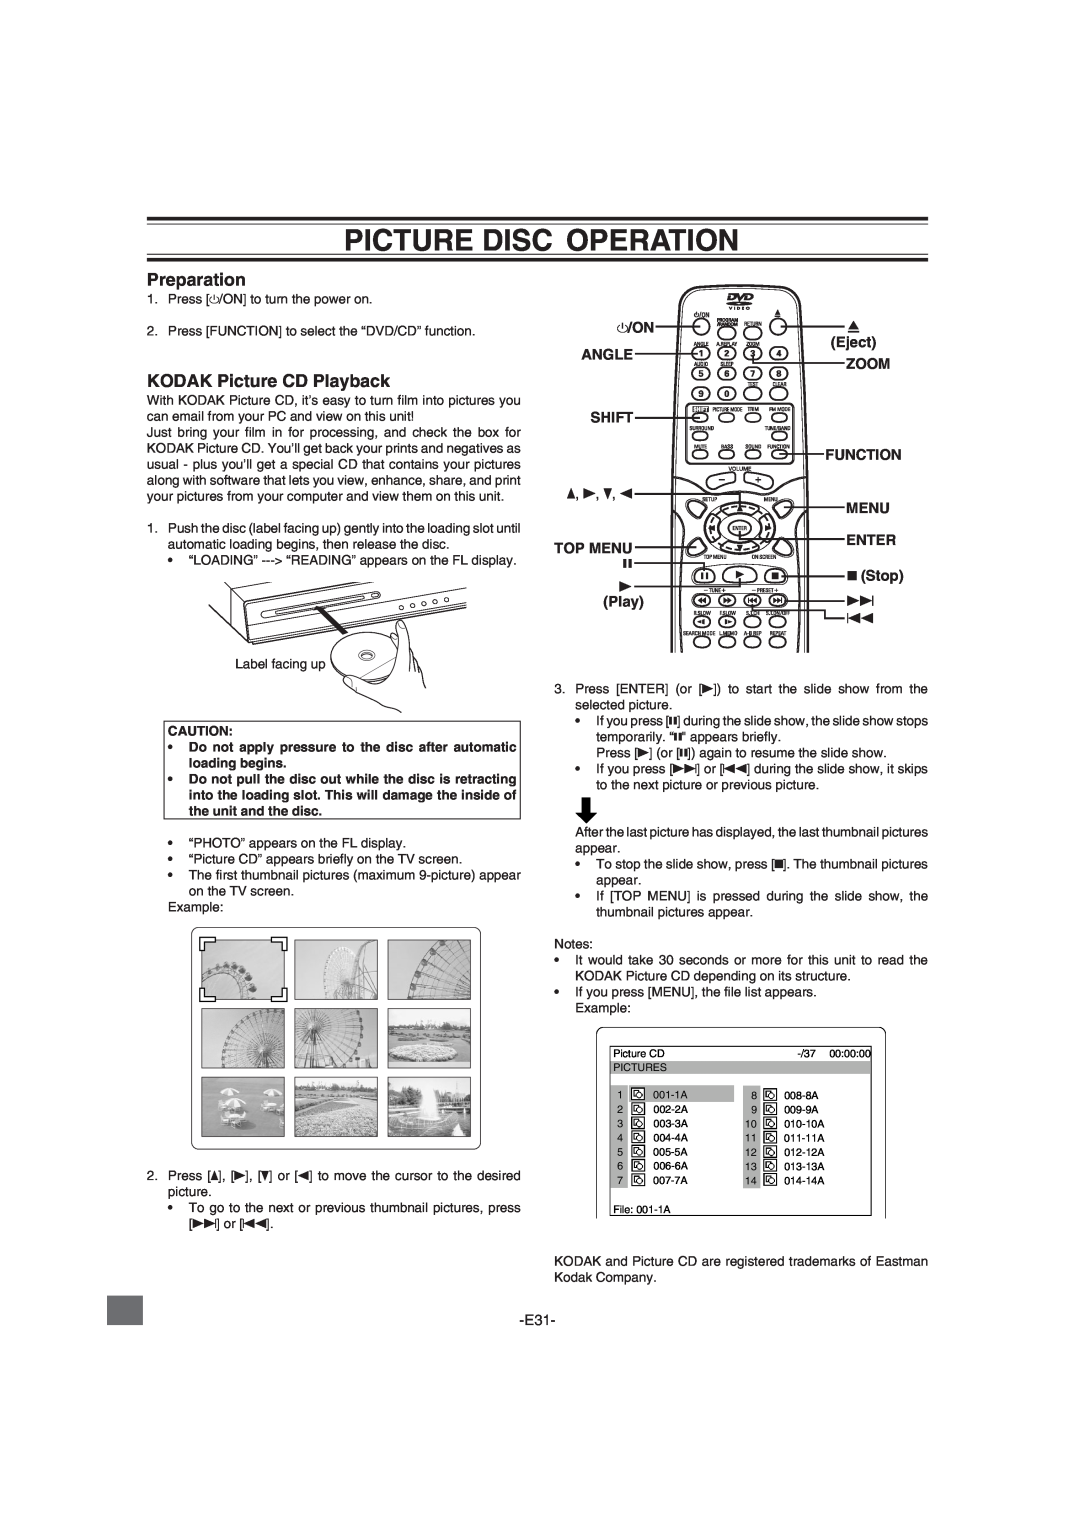 Sanyo DWM-2600 instruction manual Picture Disc Operation, Preparation, KODAK Picture CD Playback 